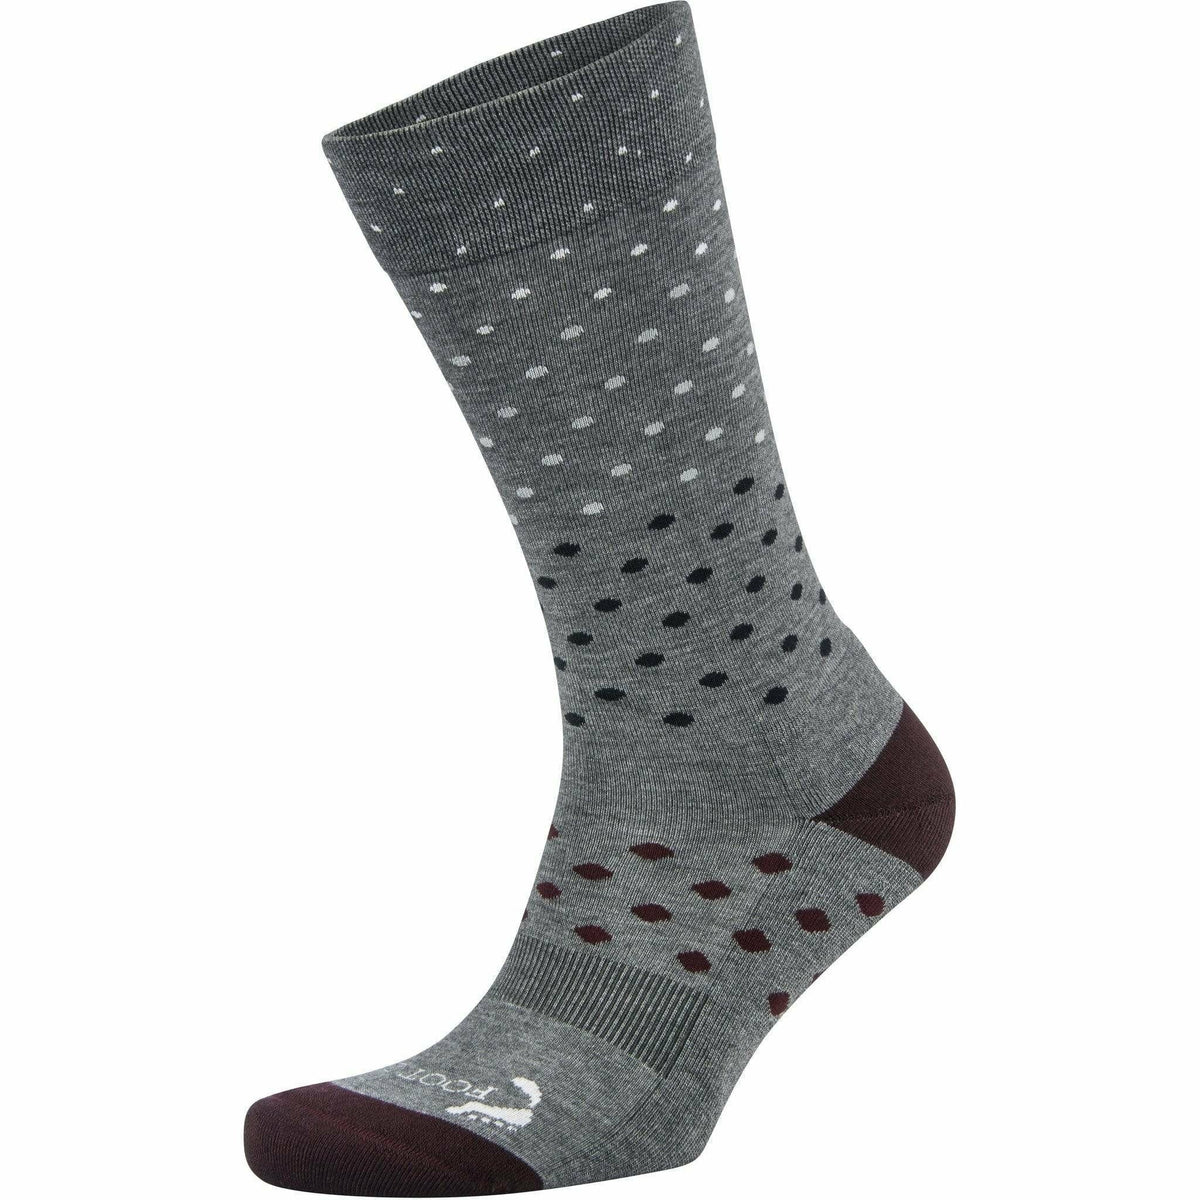 Foot Zen Socks | Free Shipping on Orders $40+ at GoBros.com